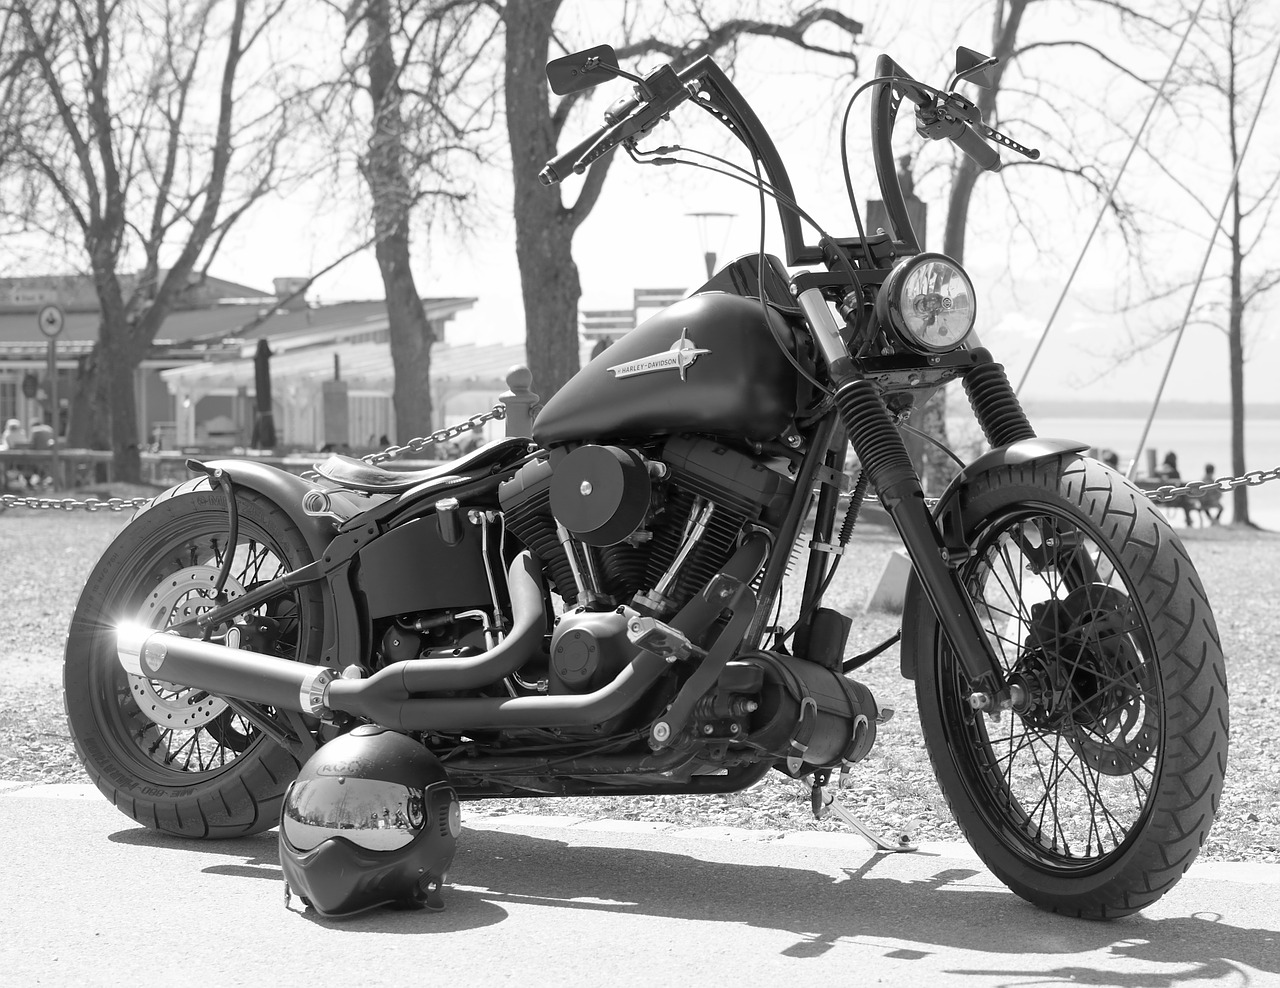 Harley,harley davidson,motorcycle,bike,black - free image from needpix.com